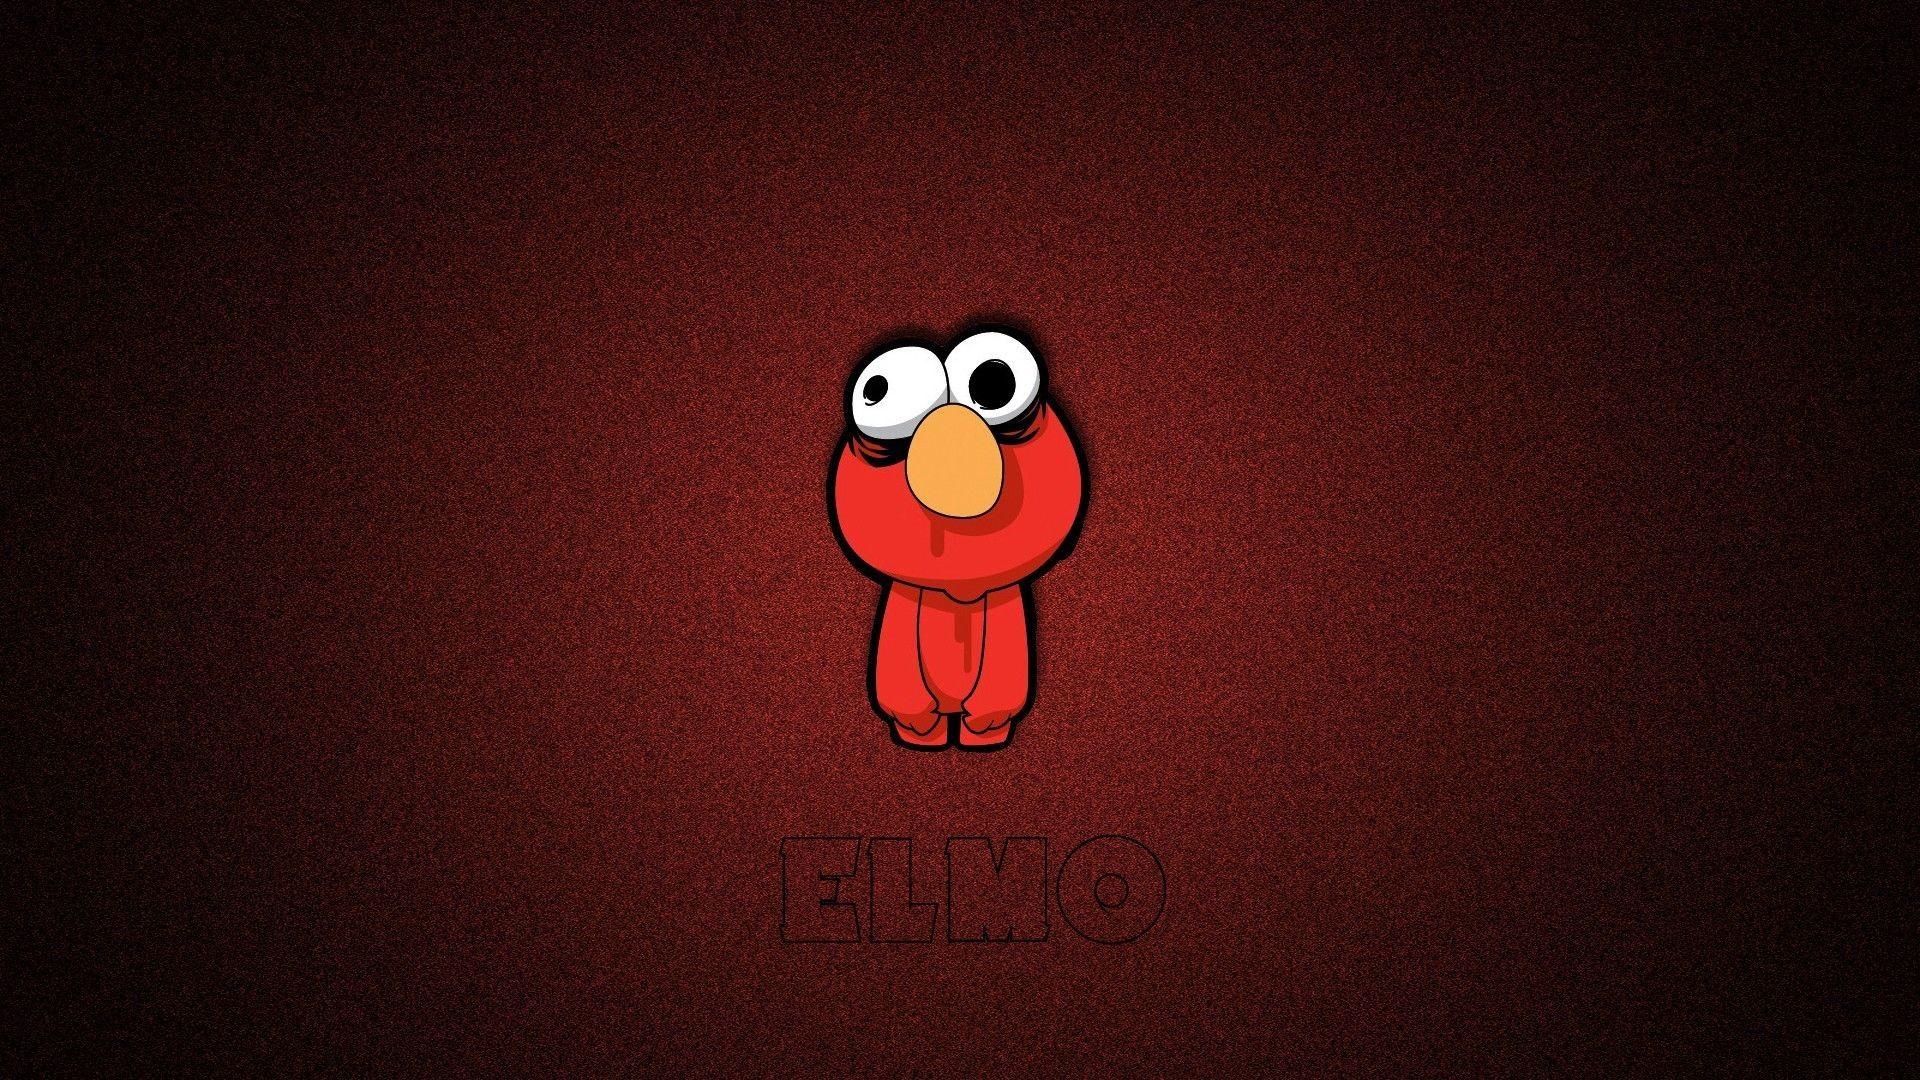 Elmo Tumblr Hi Rise Image. Beautiful image HD Picture & Desktop